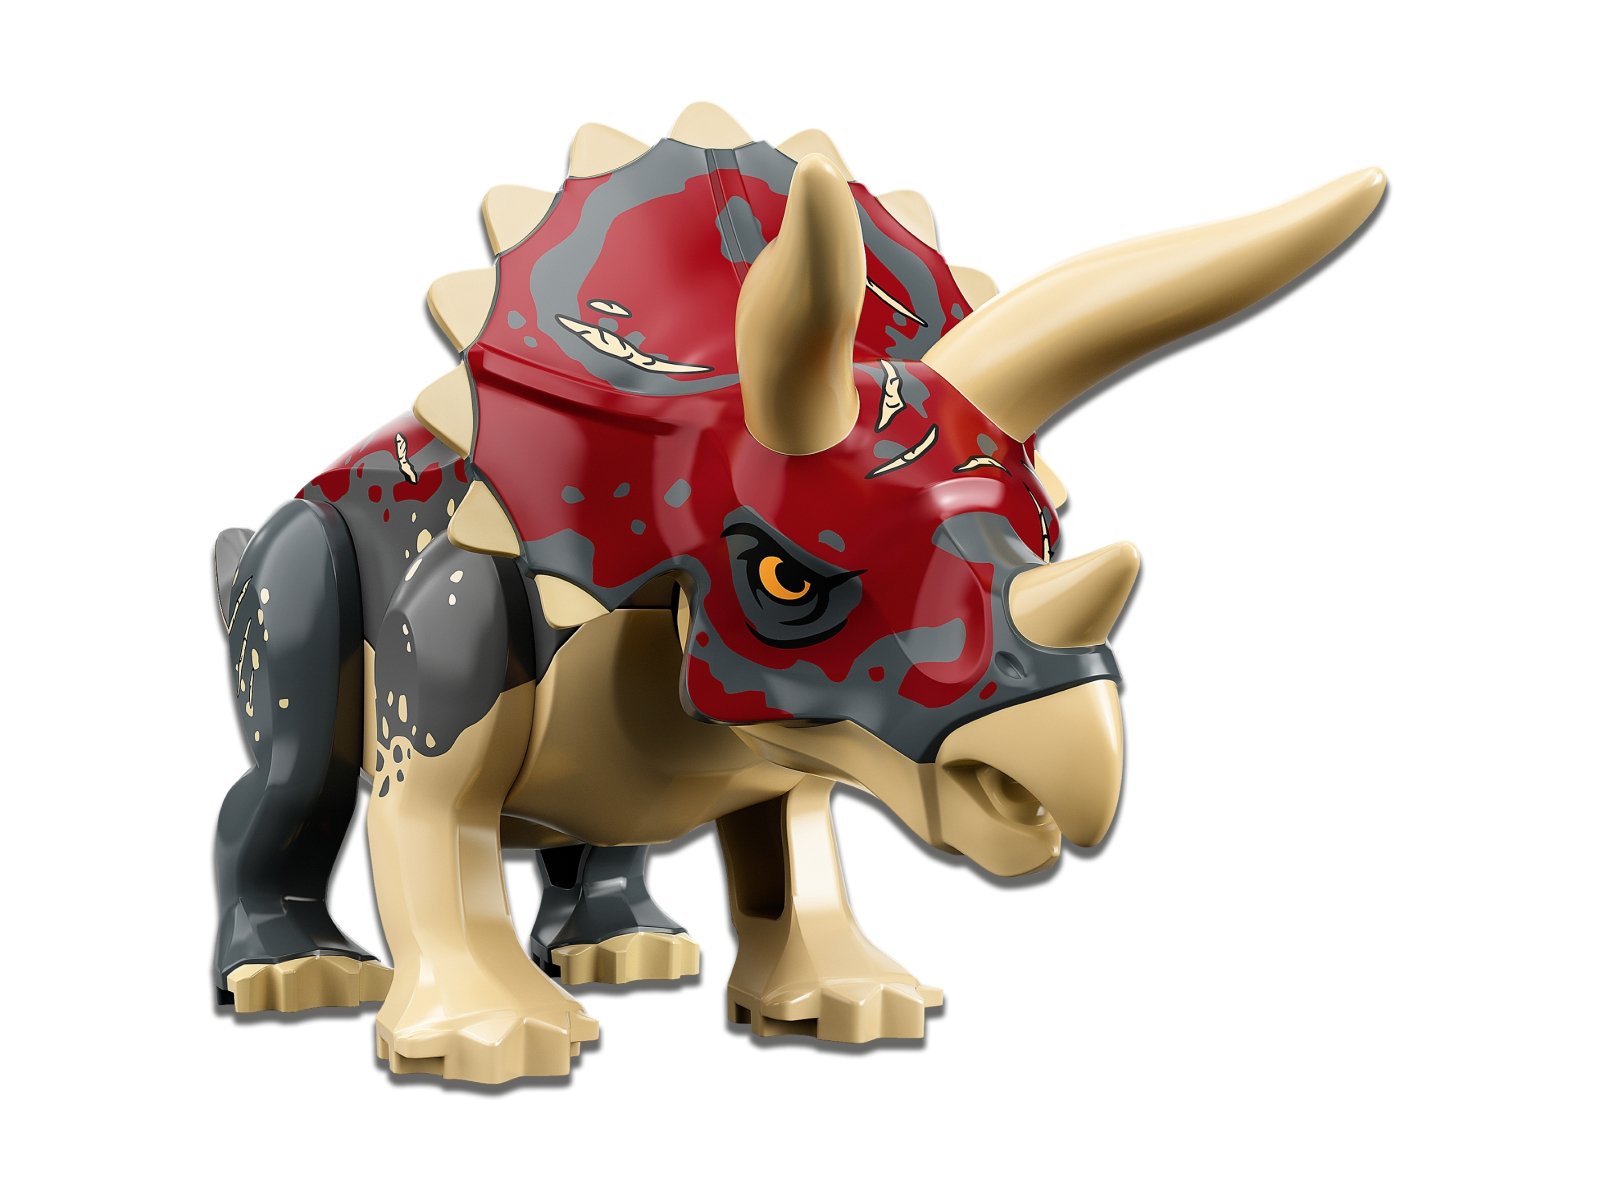 LEGO 76950 Triceratops i zasadzka z pick-upem